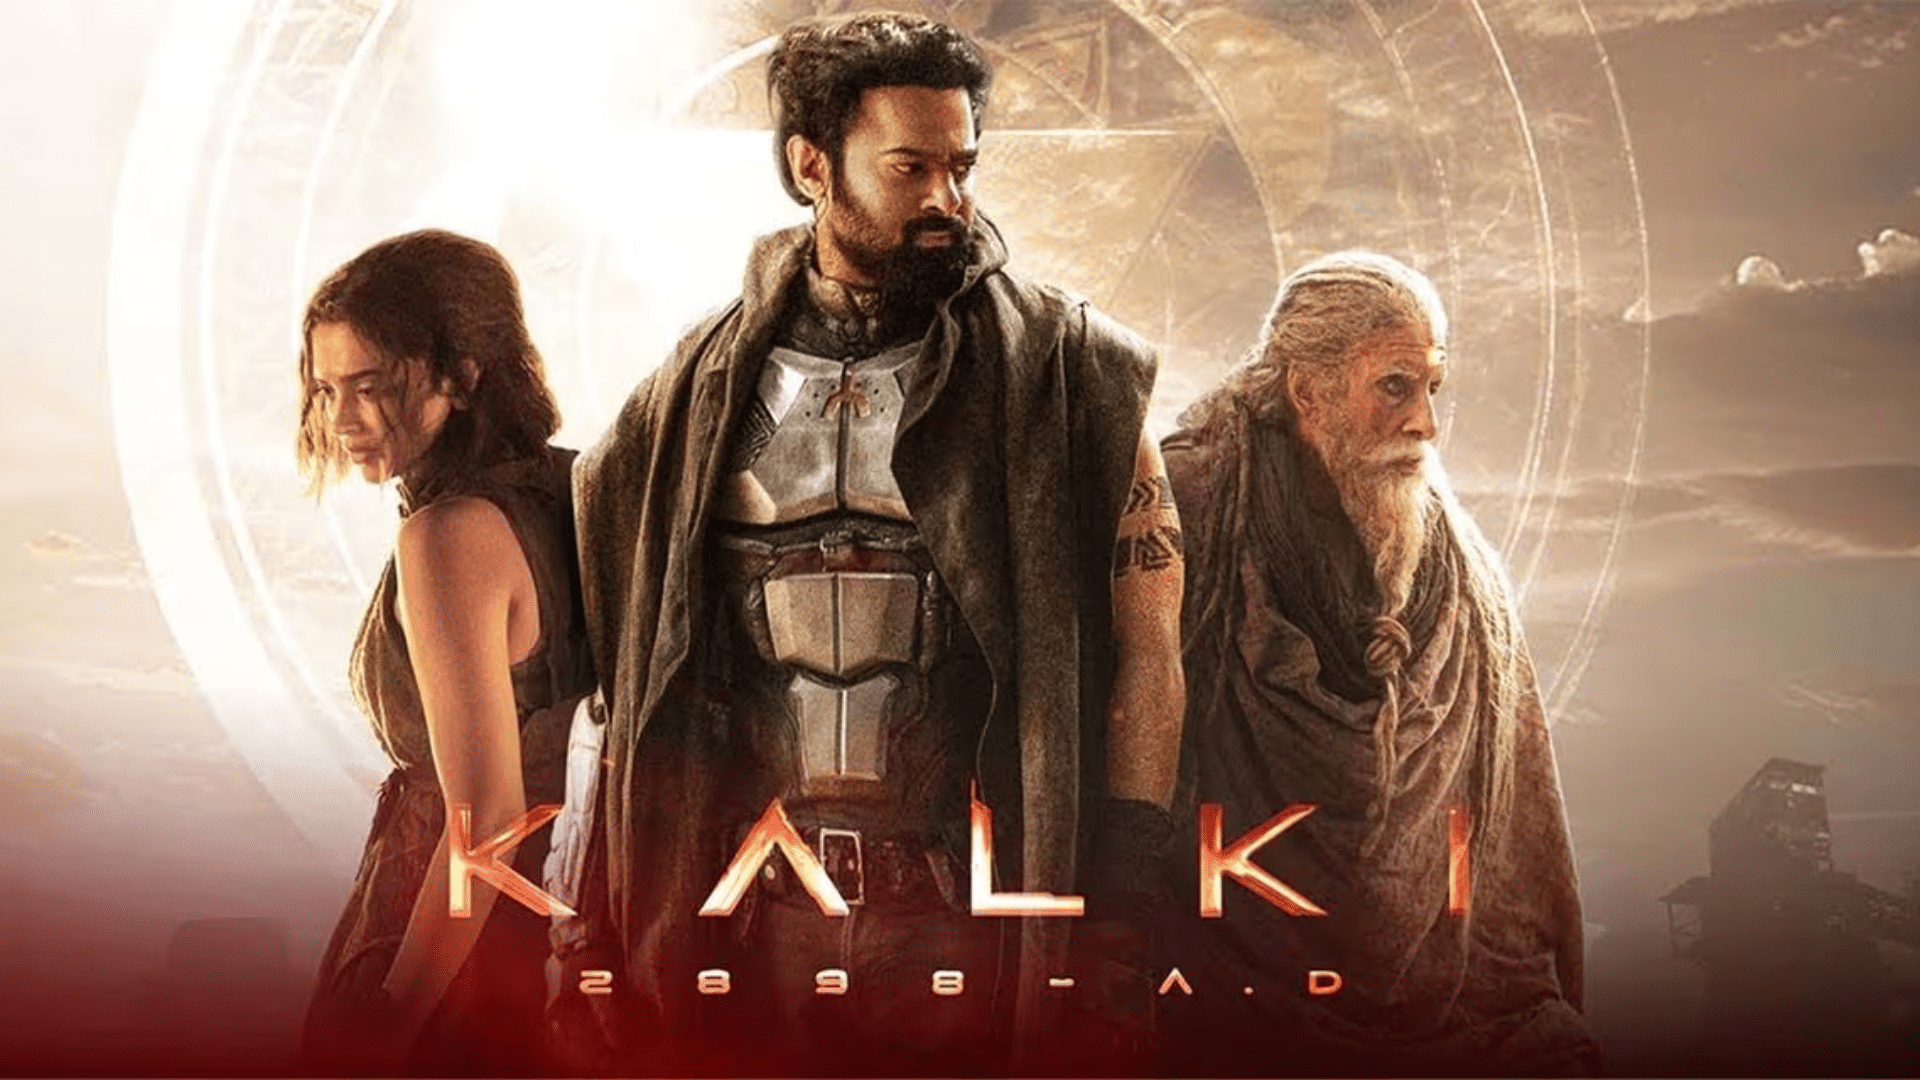 Kalki 2898 AD Movie Review in Hindi